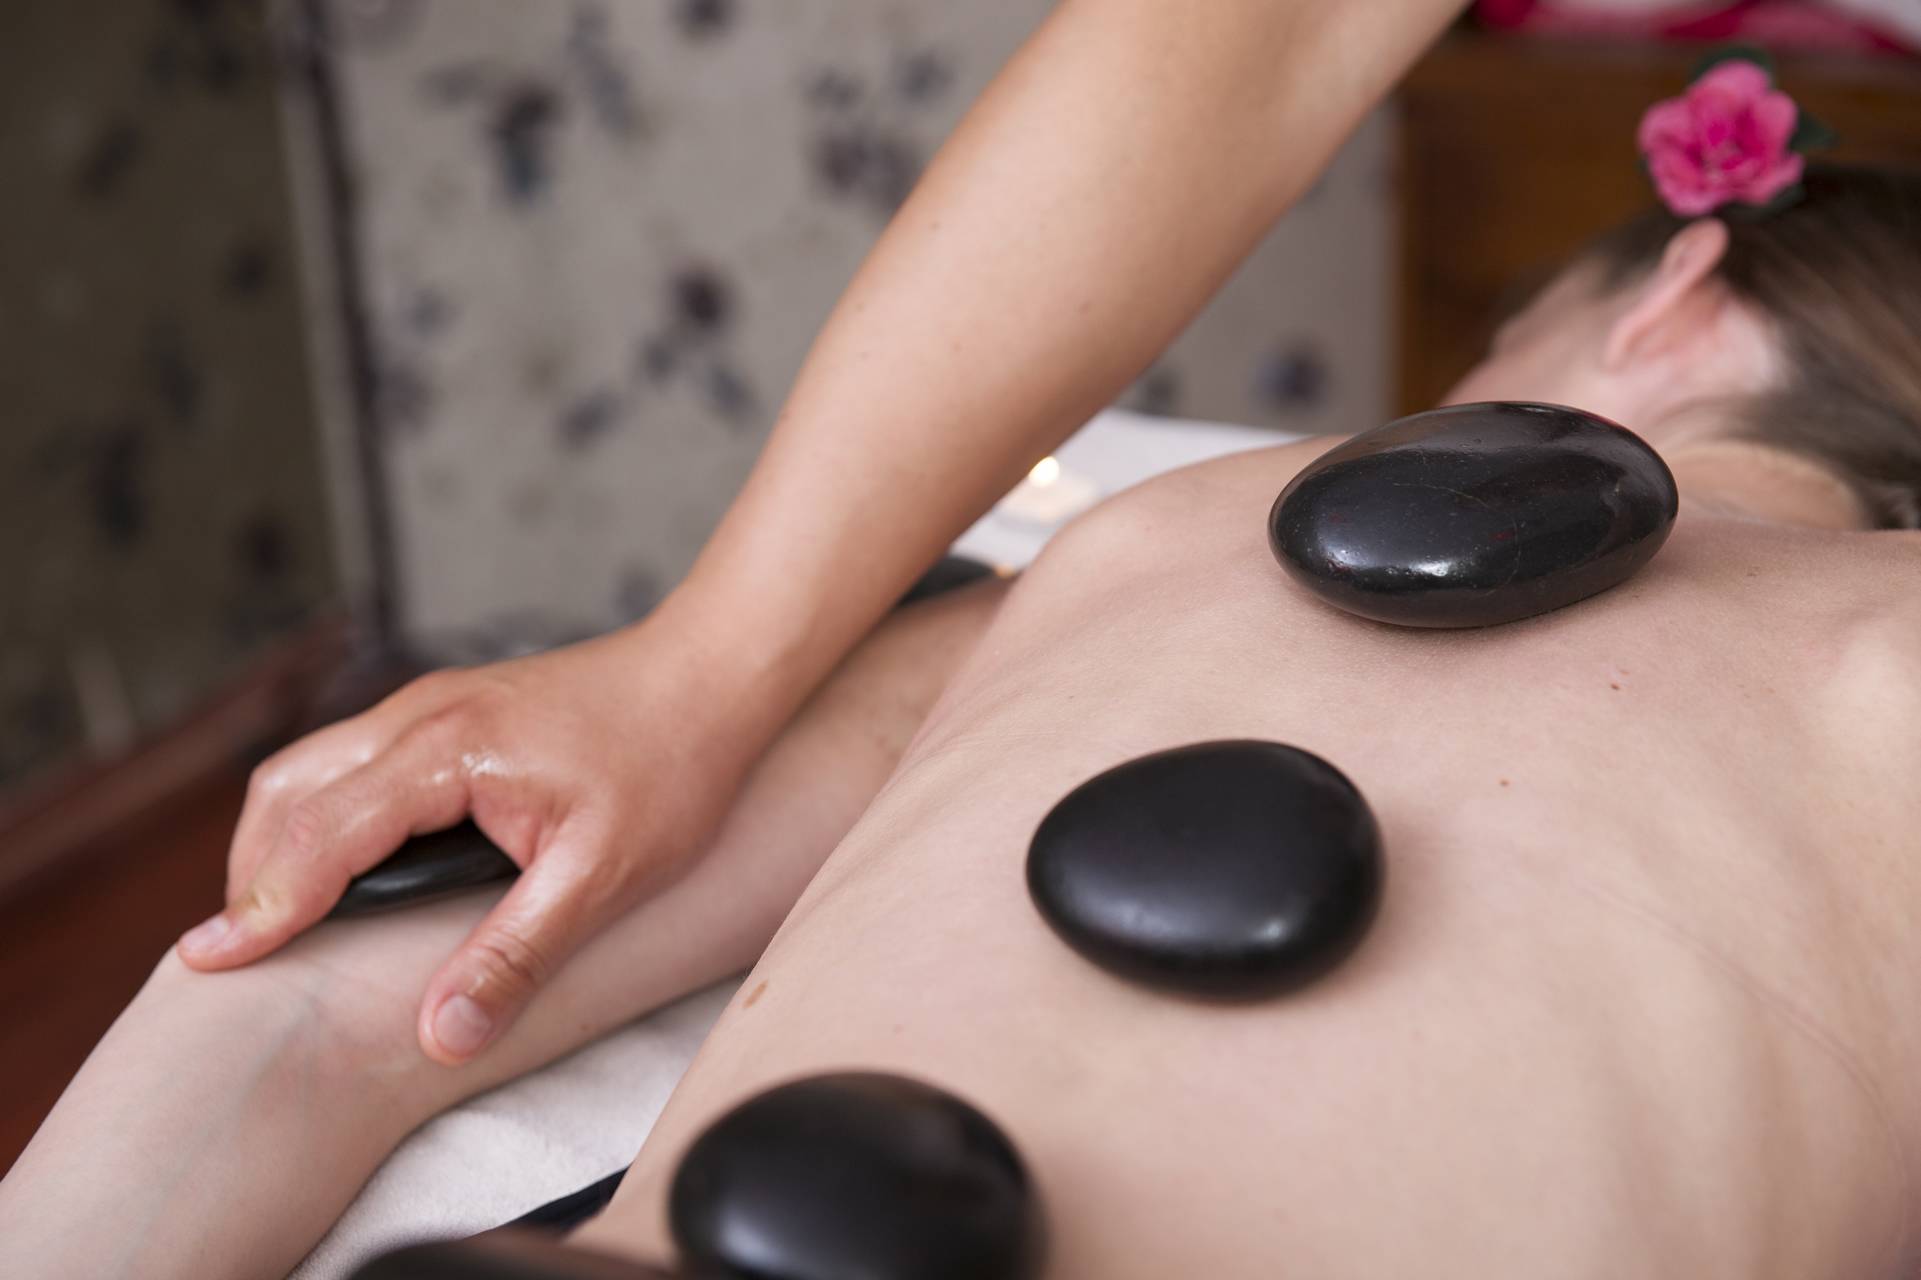 Hot Stone massage at Asian Spa Miami